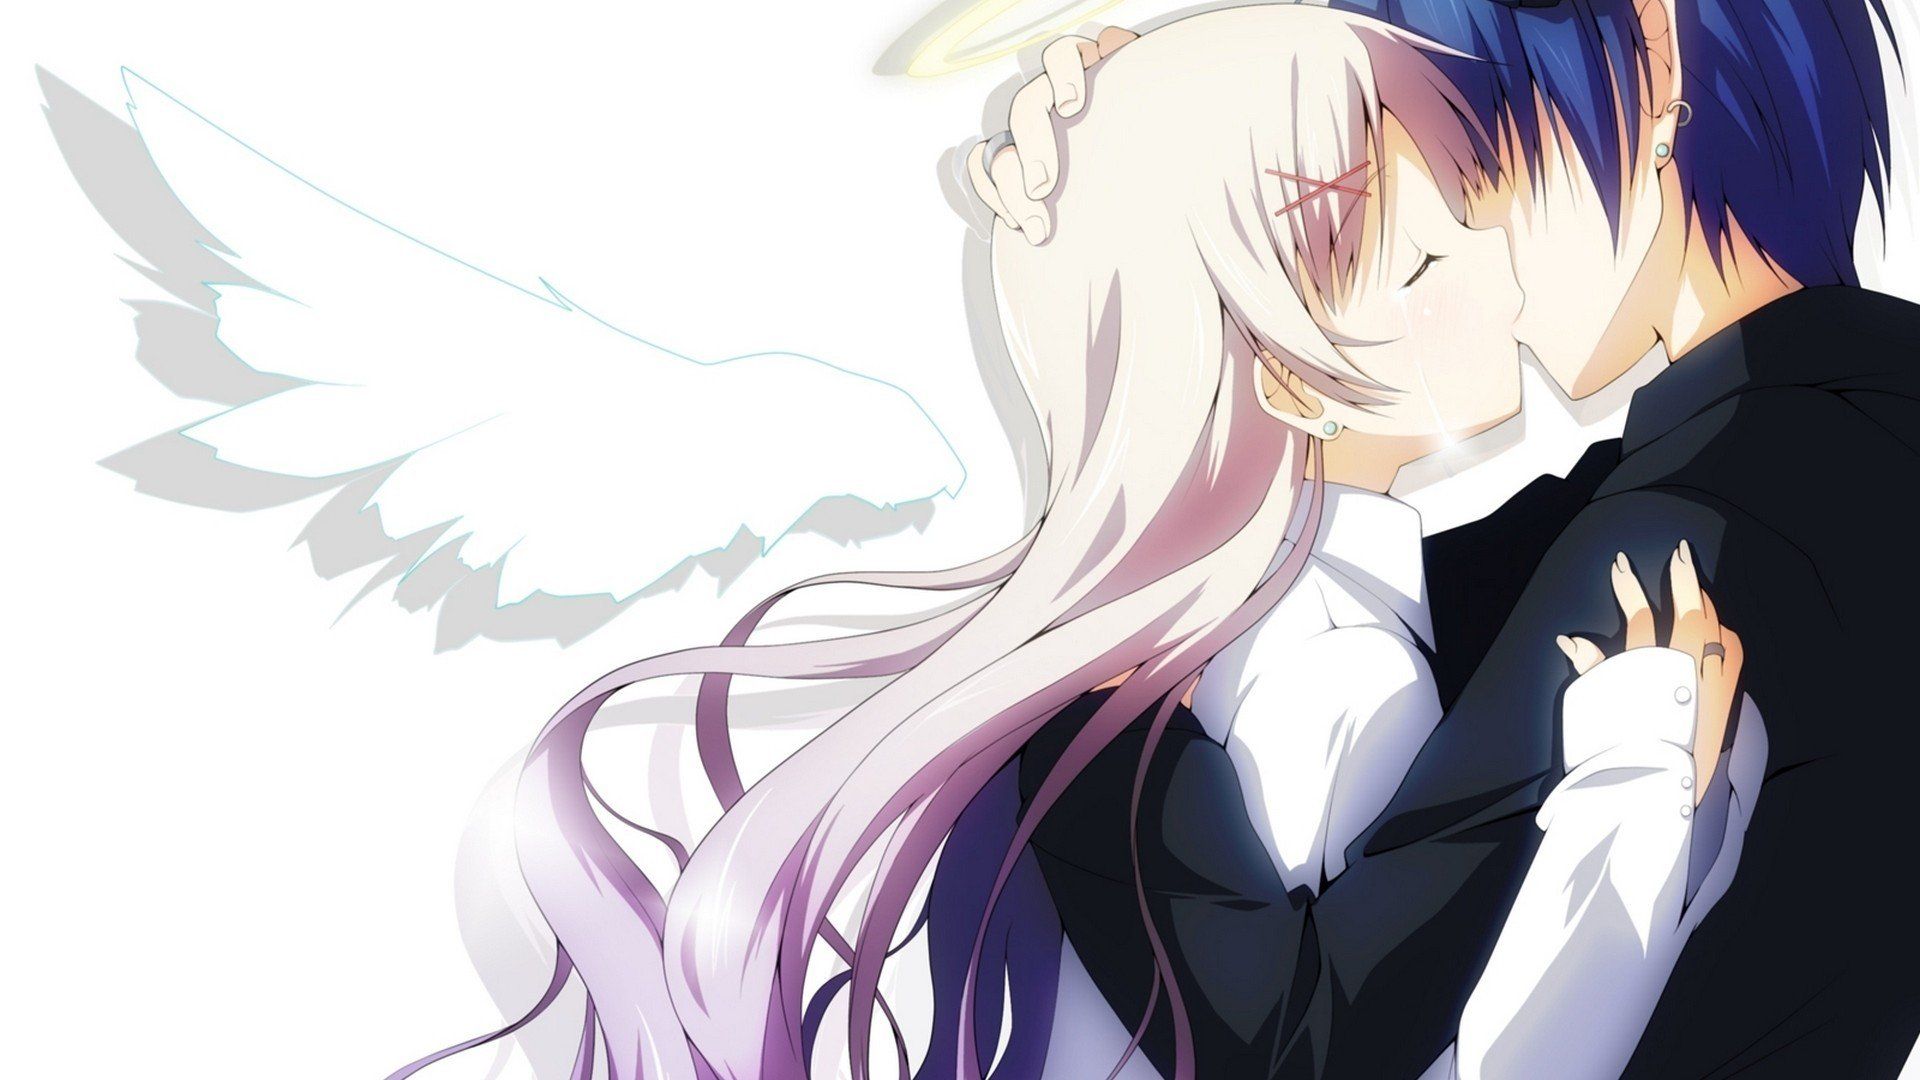 anime kiss - Other & Anime Background Wallpapers on Desktop Nexus (Image  835230)